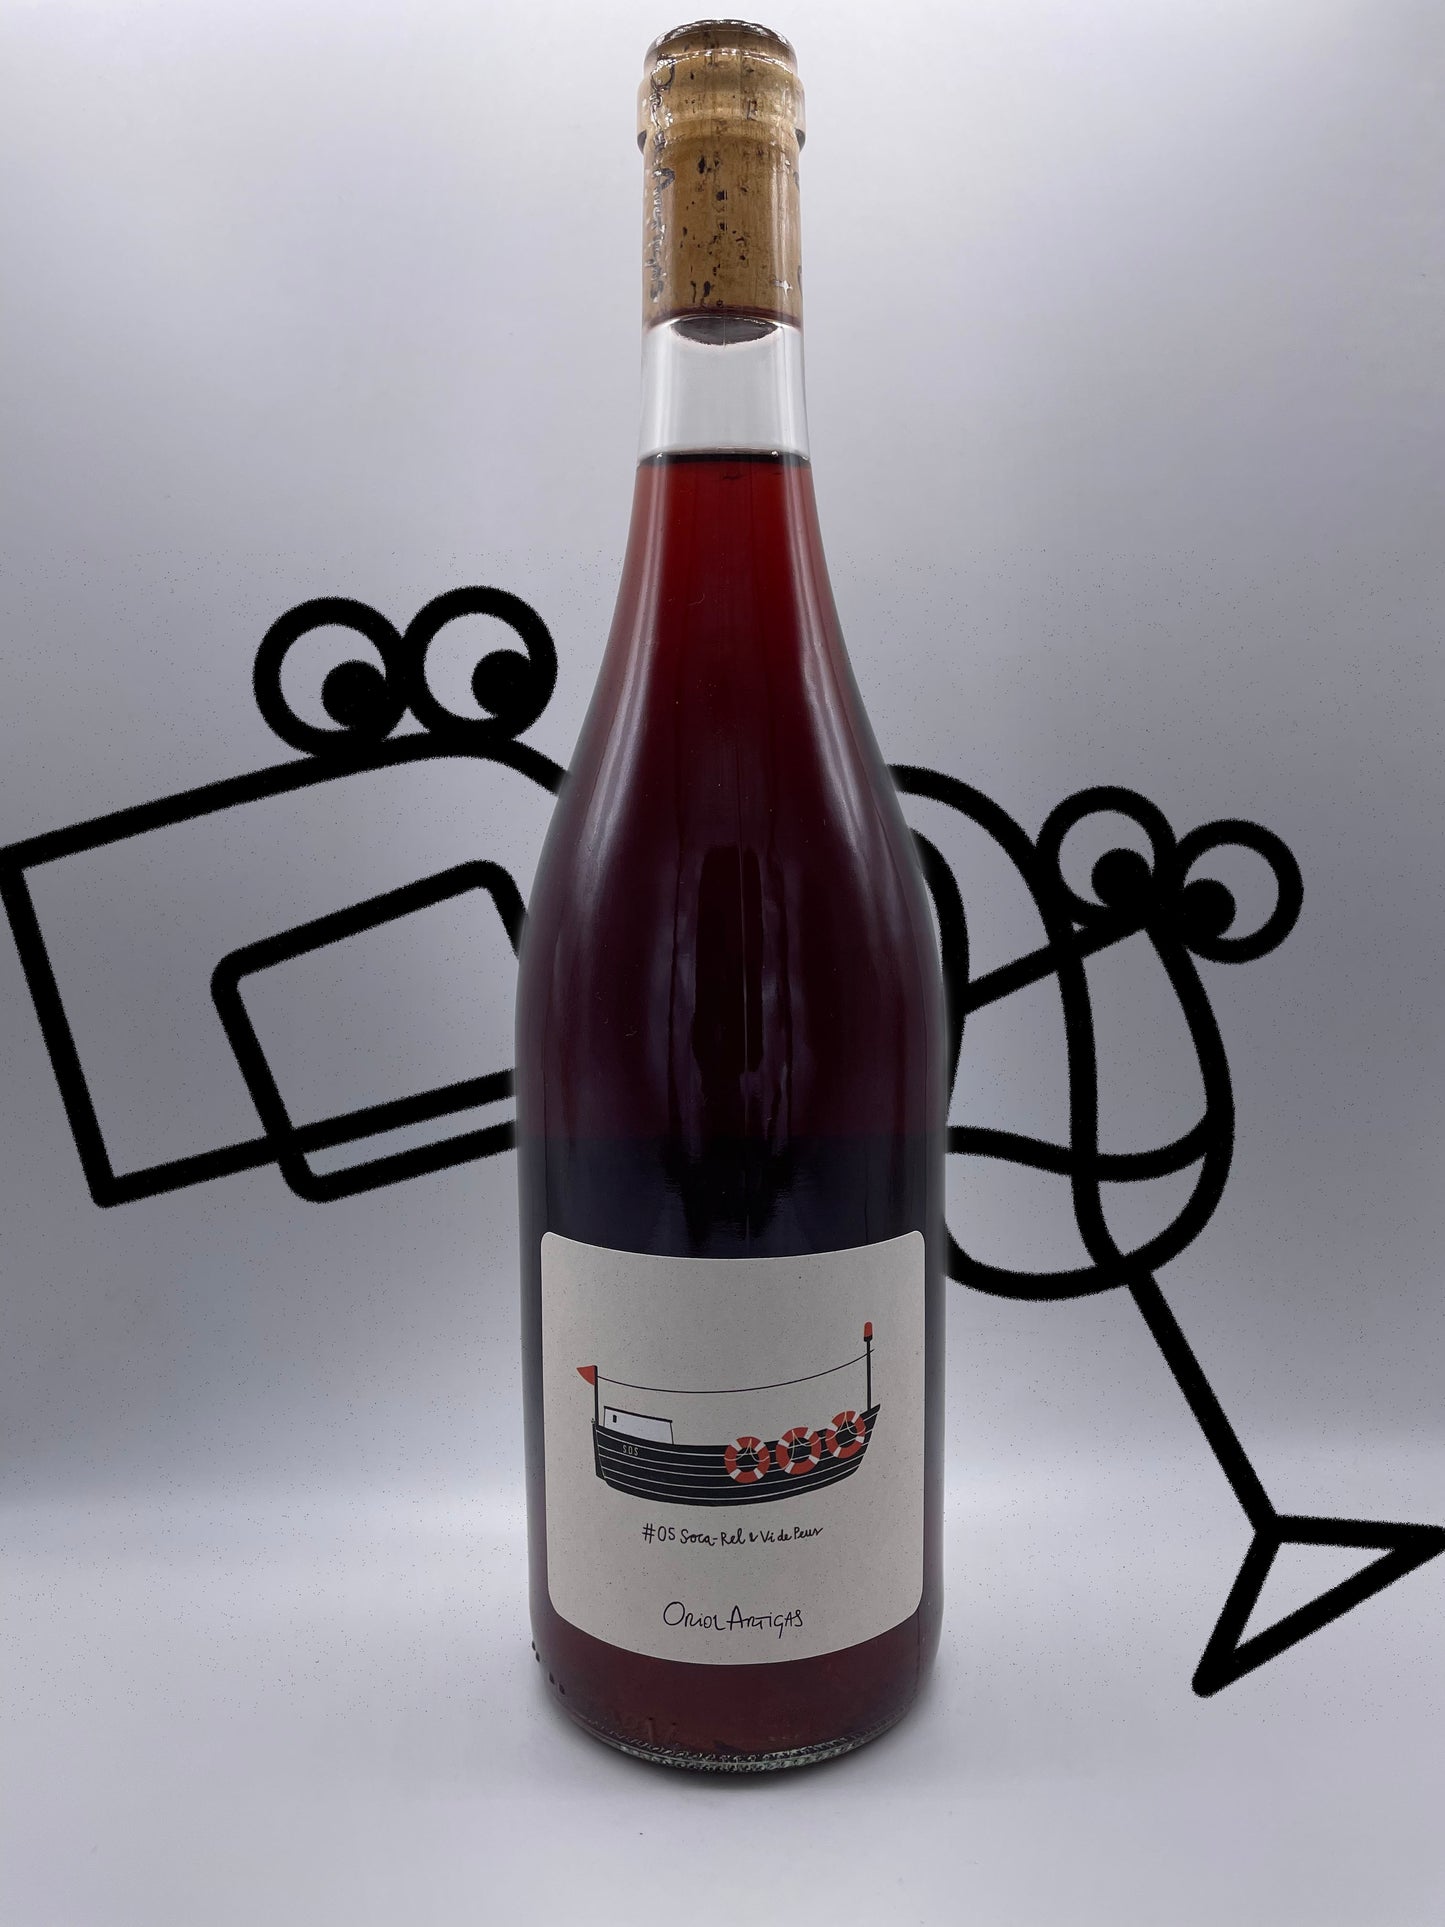 Oriol Artigas SOS#5 Soca Rel & Vi De Peus 2020 Catalonia, Spain Williston Park Wines